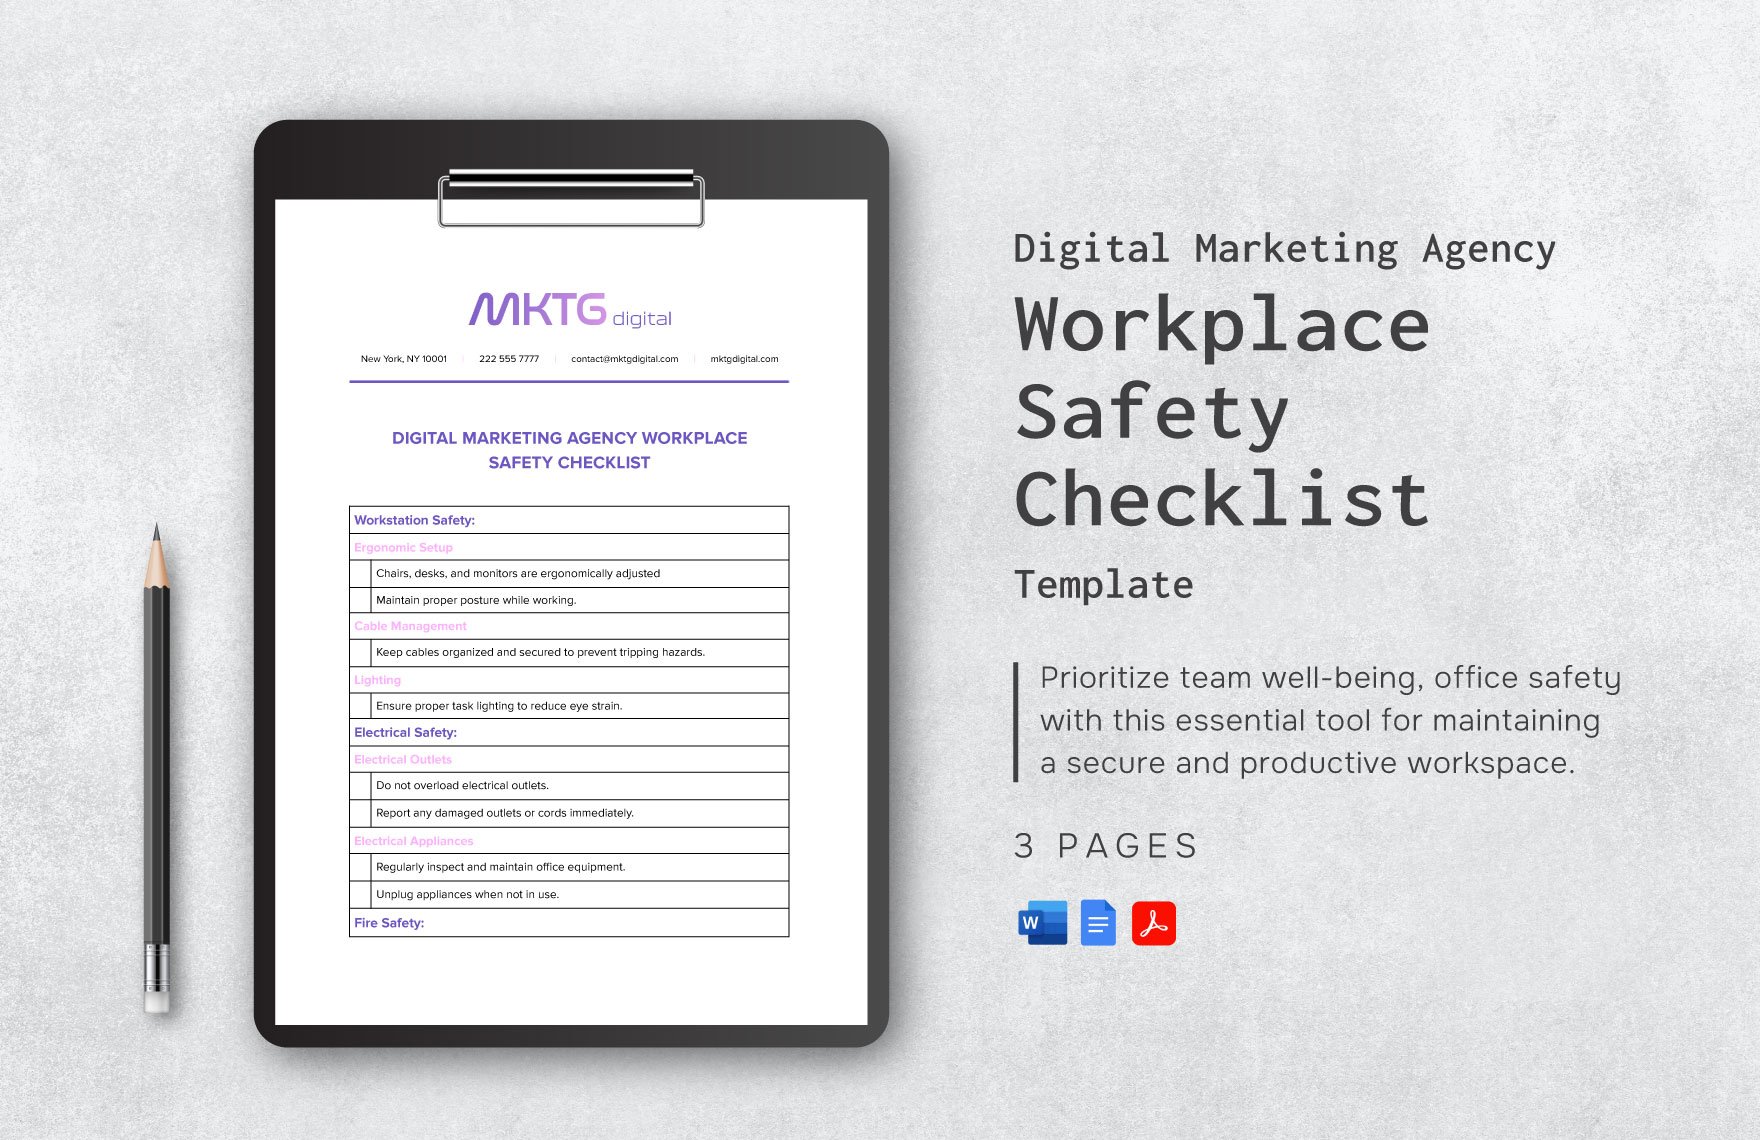 Digital Marketing Agency Workplace Safety Checklist Template